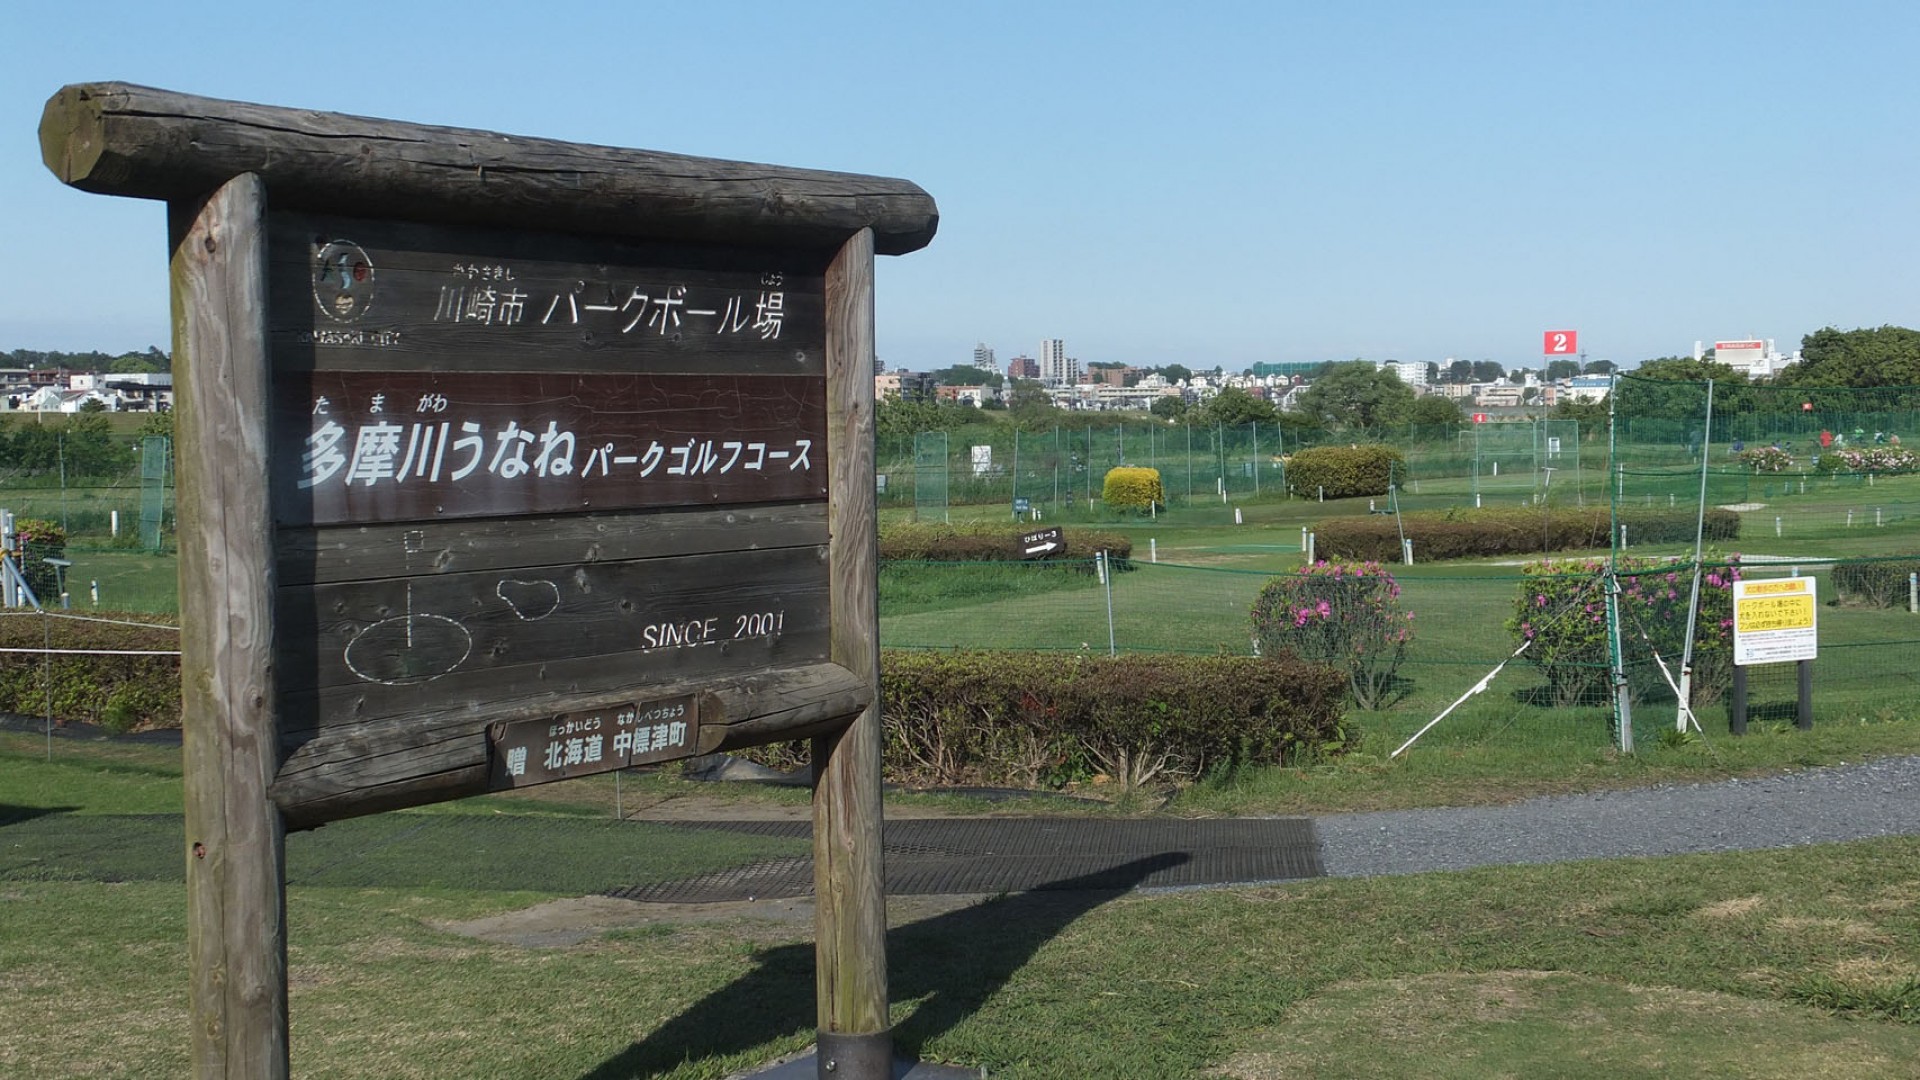 Parque Tamagawa Unane Golf